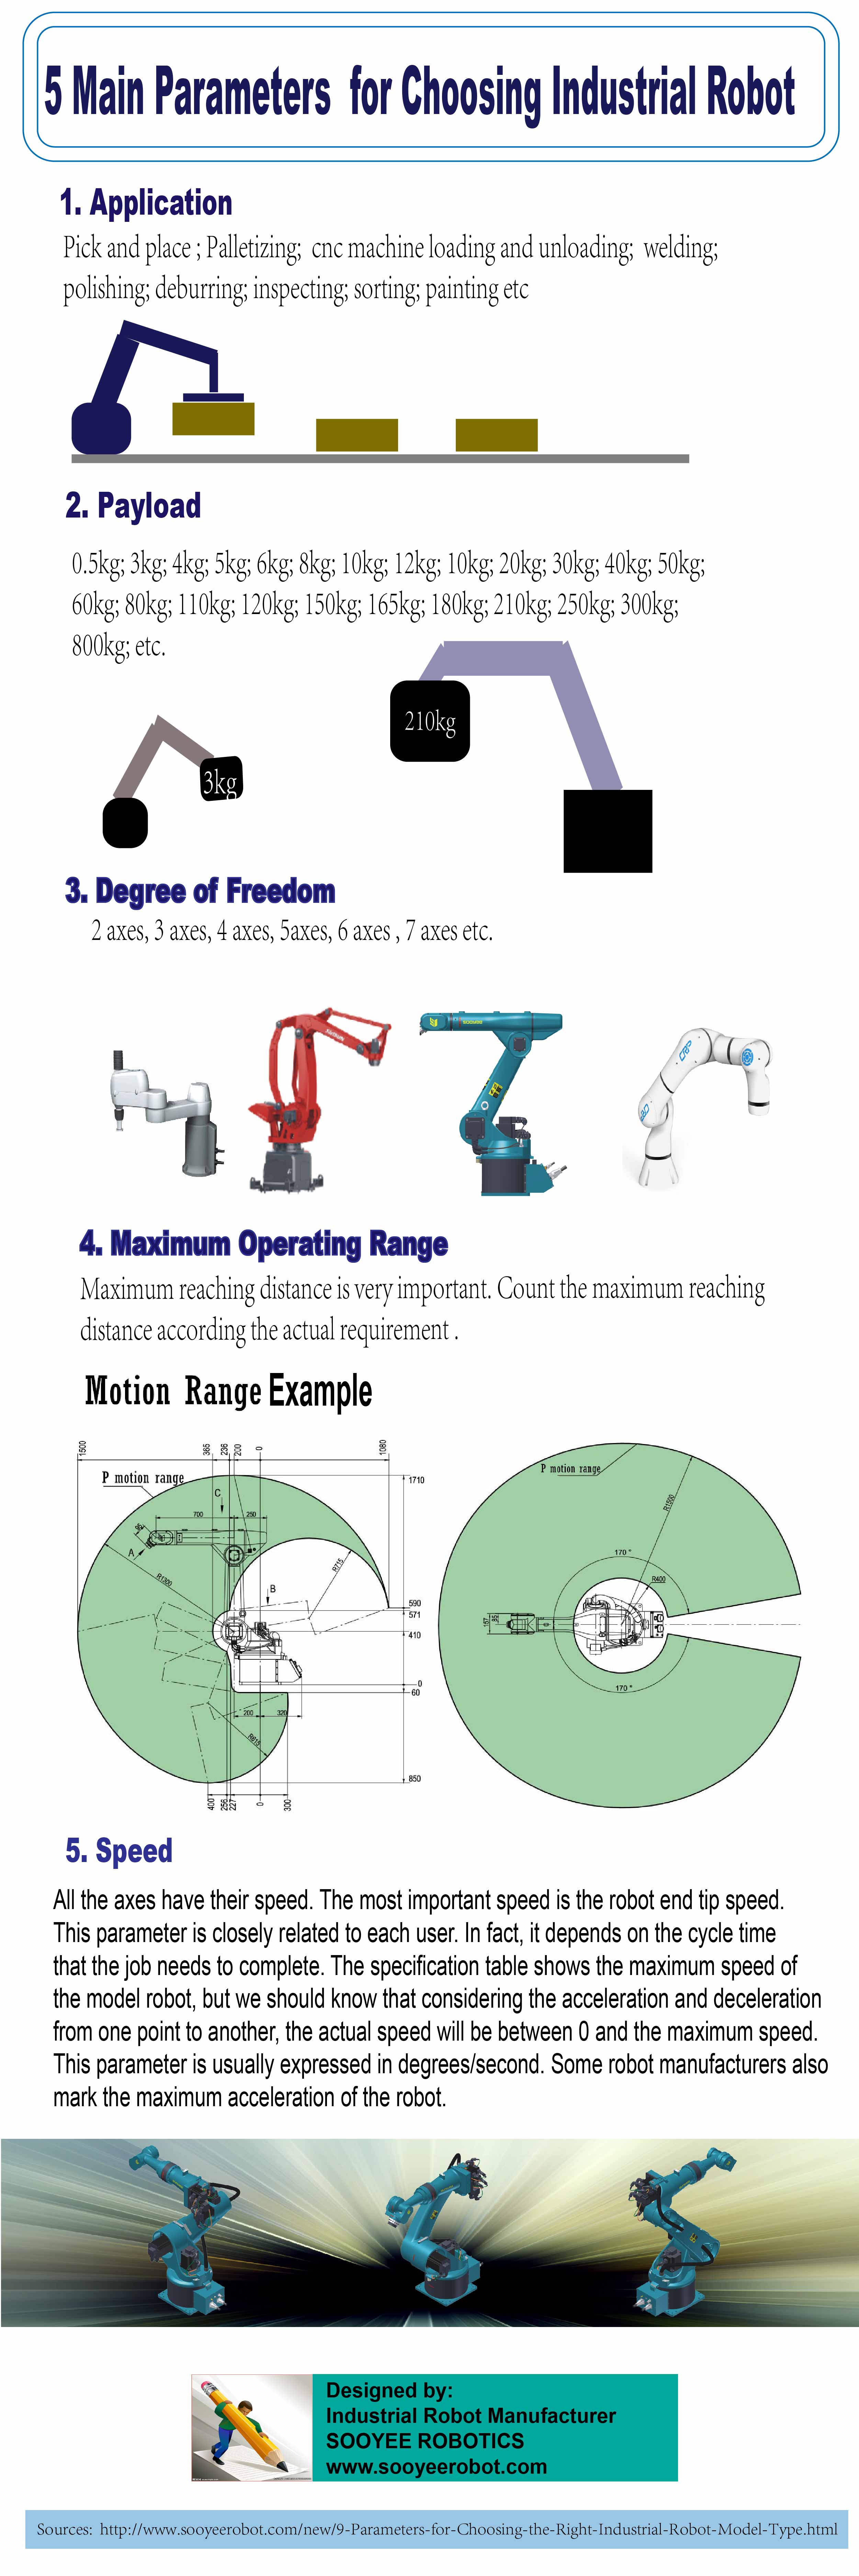 5 Main Parameters for Choosing Industrial Robot